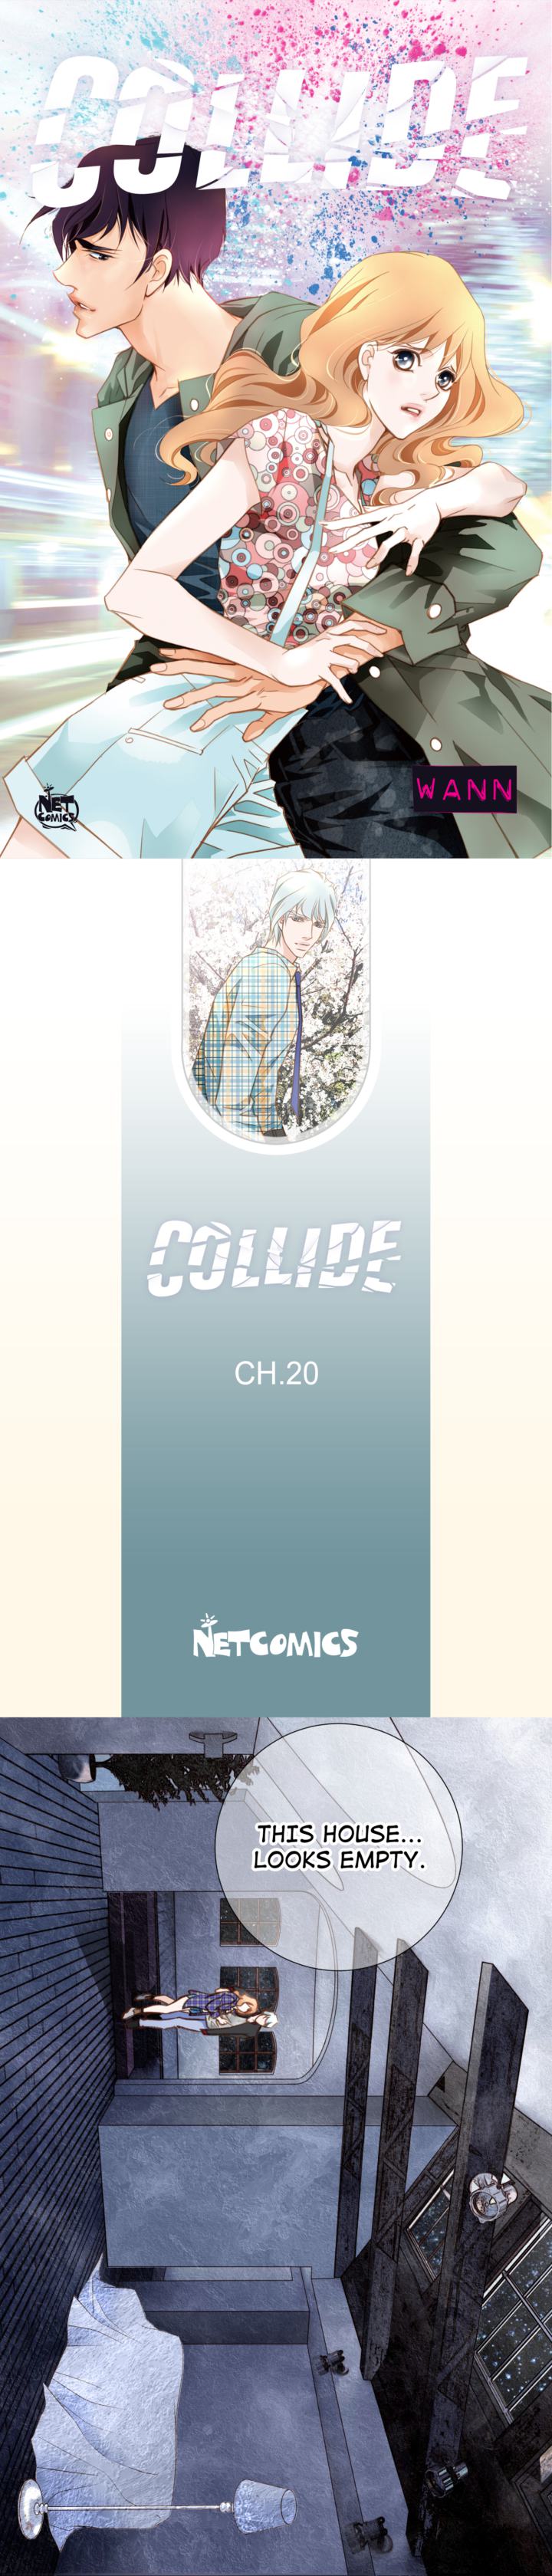 Collide Ch.20